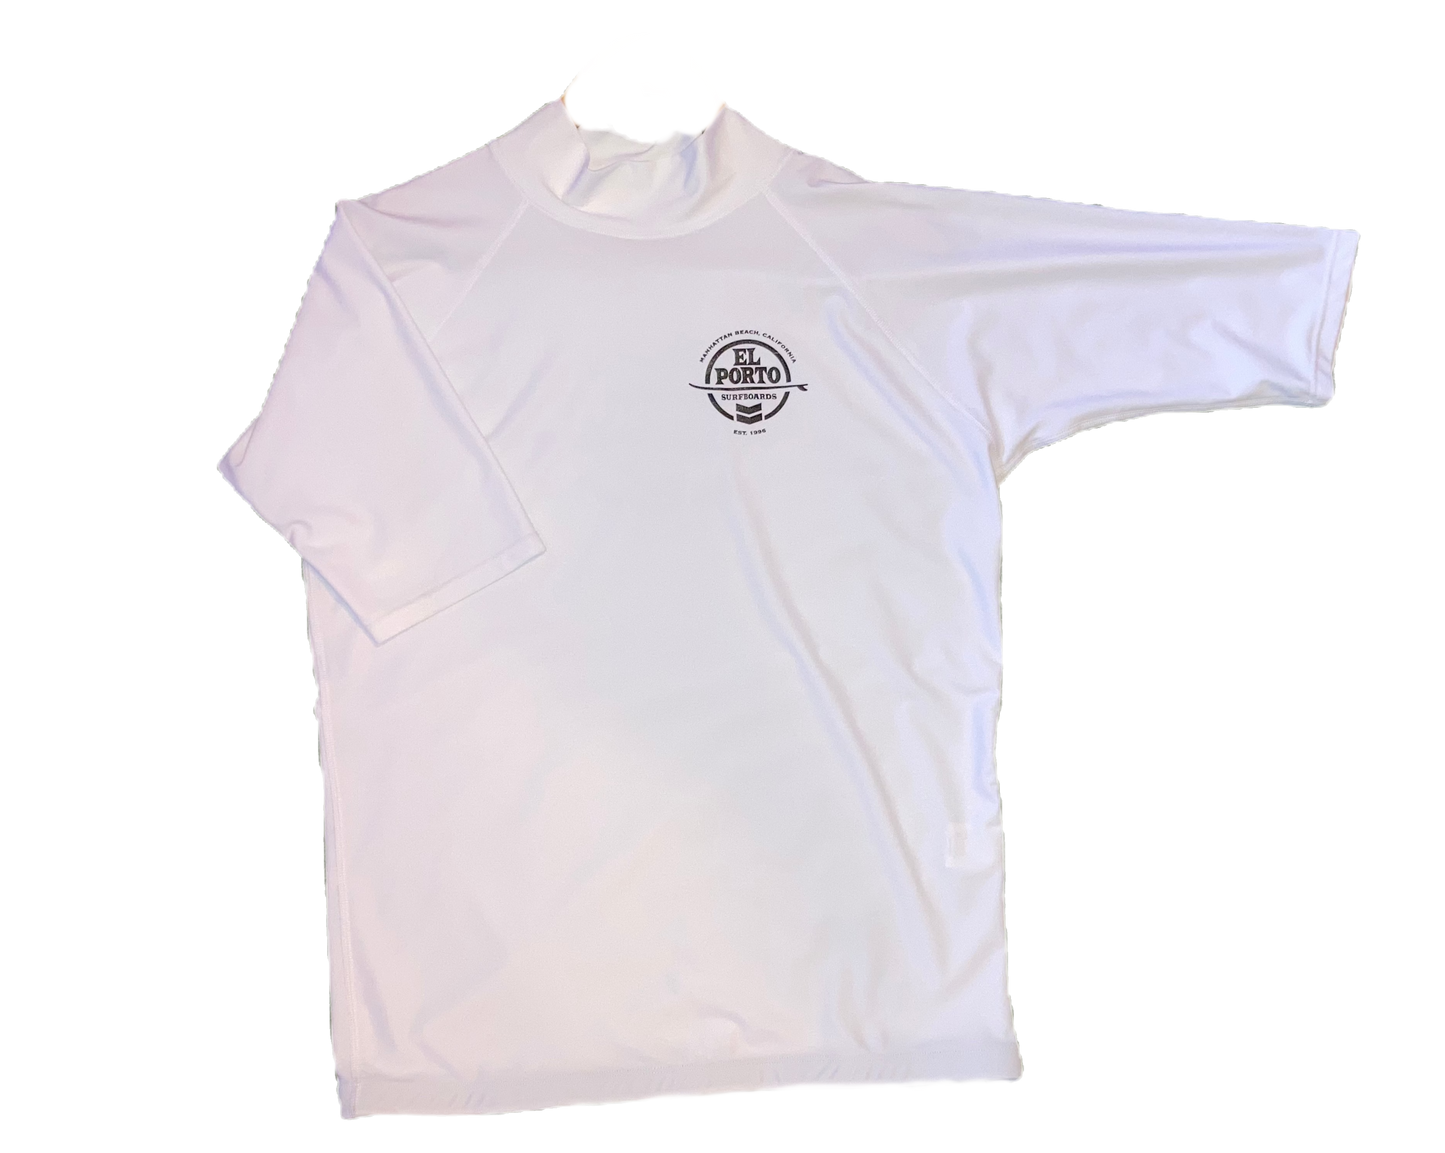 El Porto Logo Rash Guard - Short Sleeve